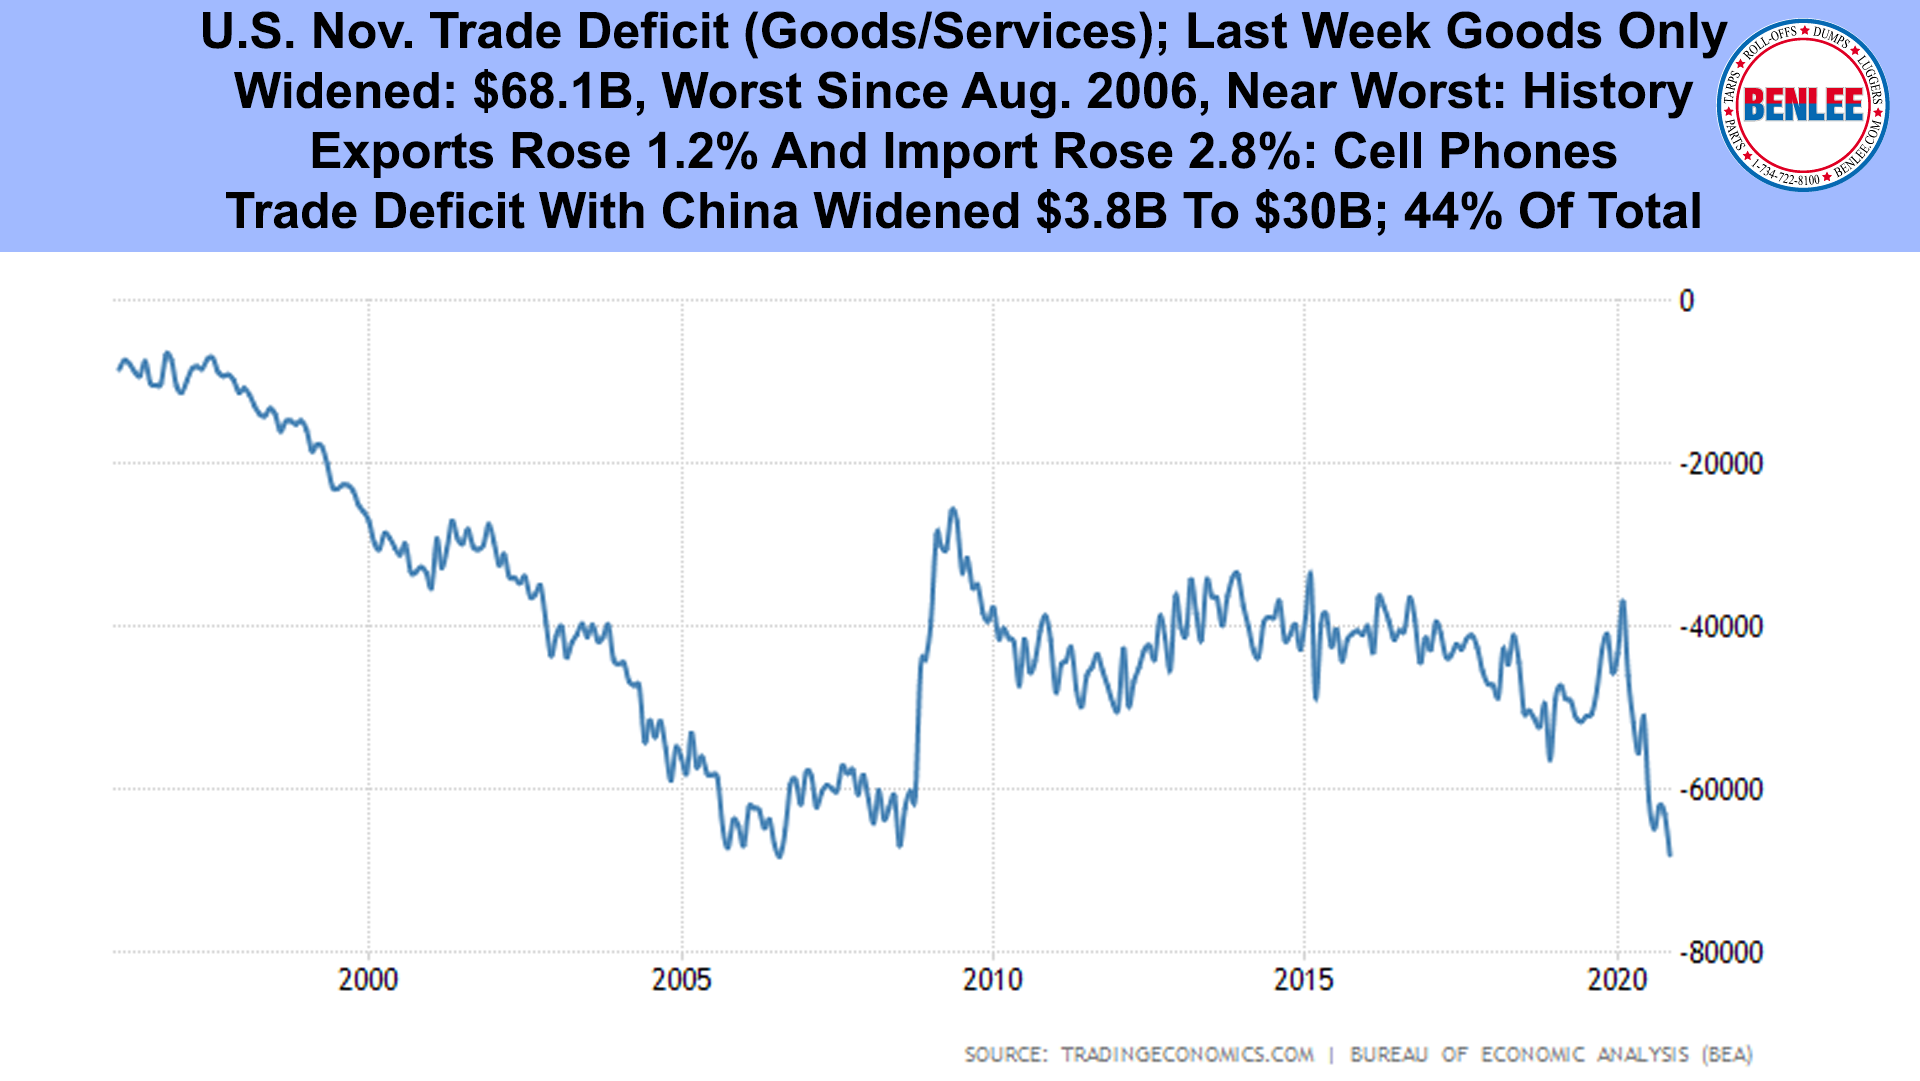 U.S. Nov. Trade Deficit